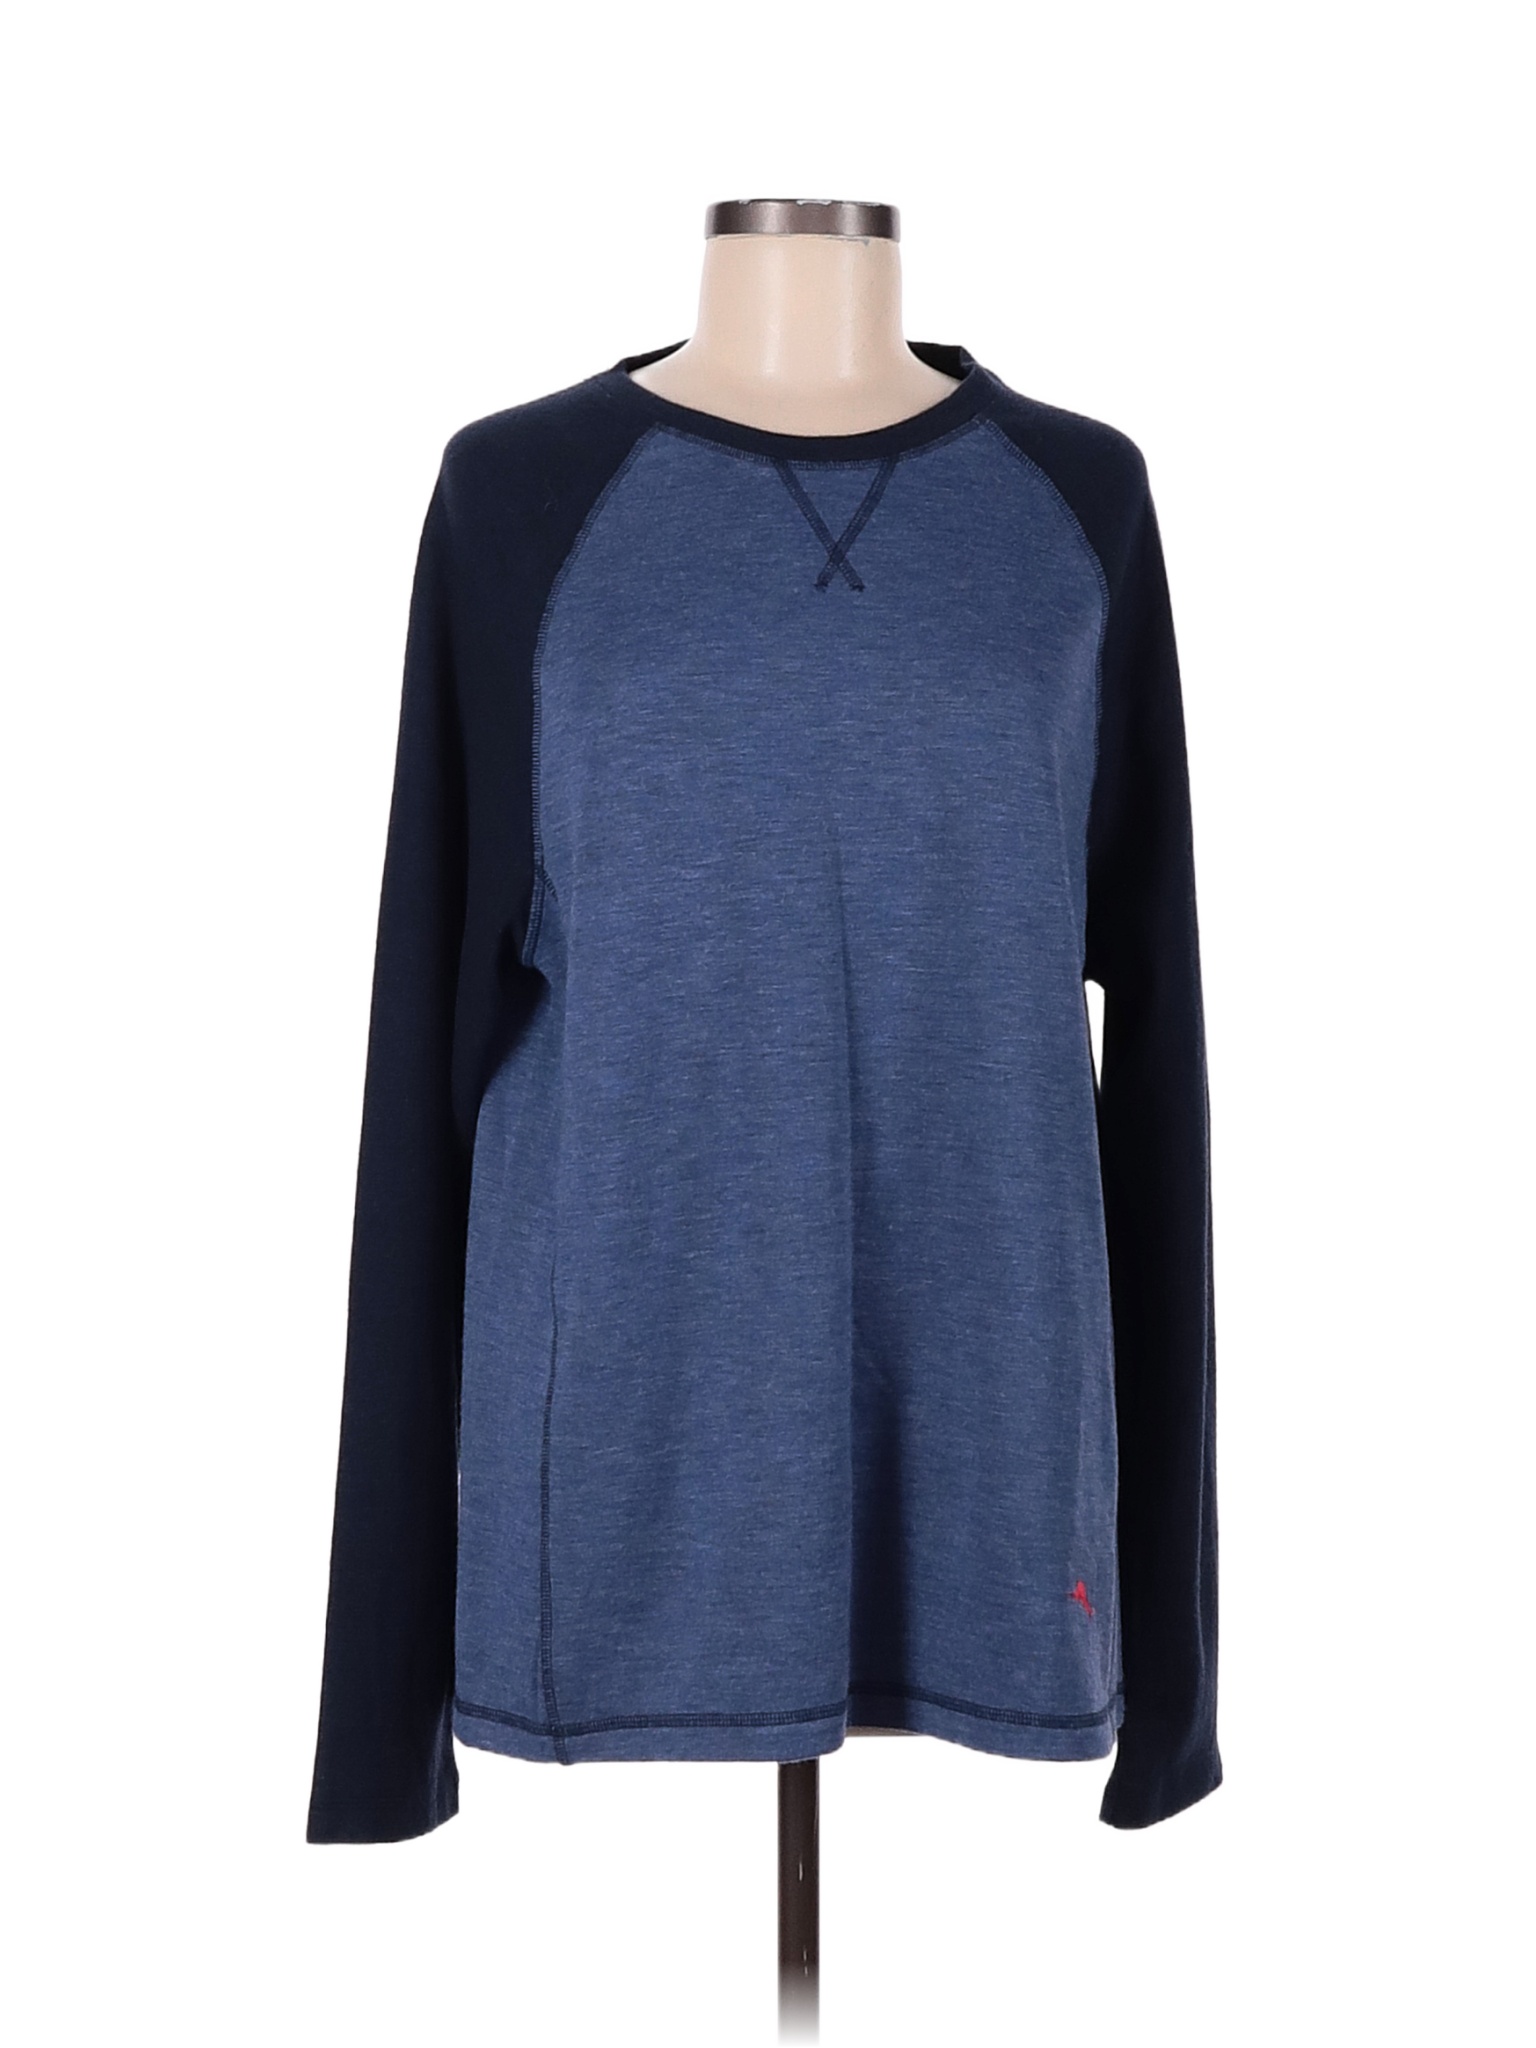 Tommy Bahama Color Block Marled Blue Sweatshirt Size M - 69% off | thredUP